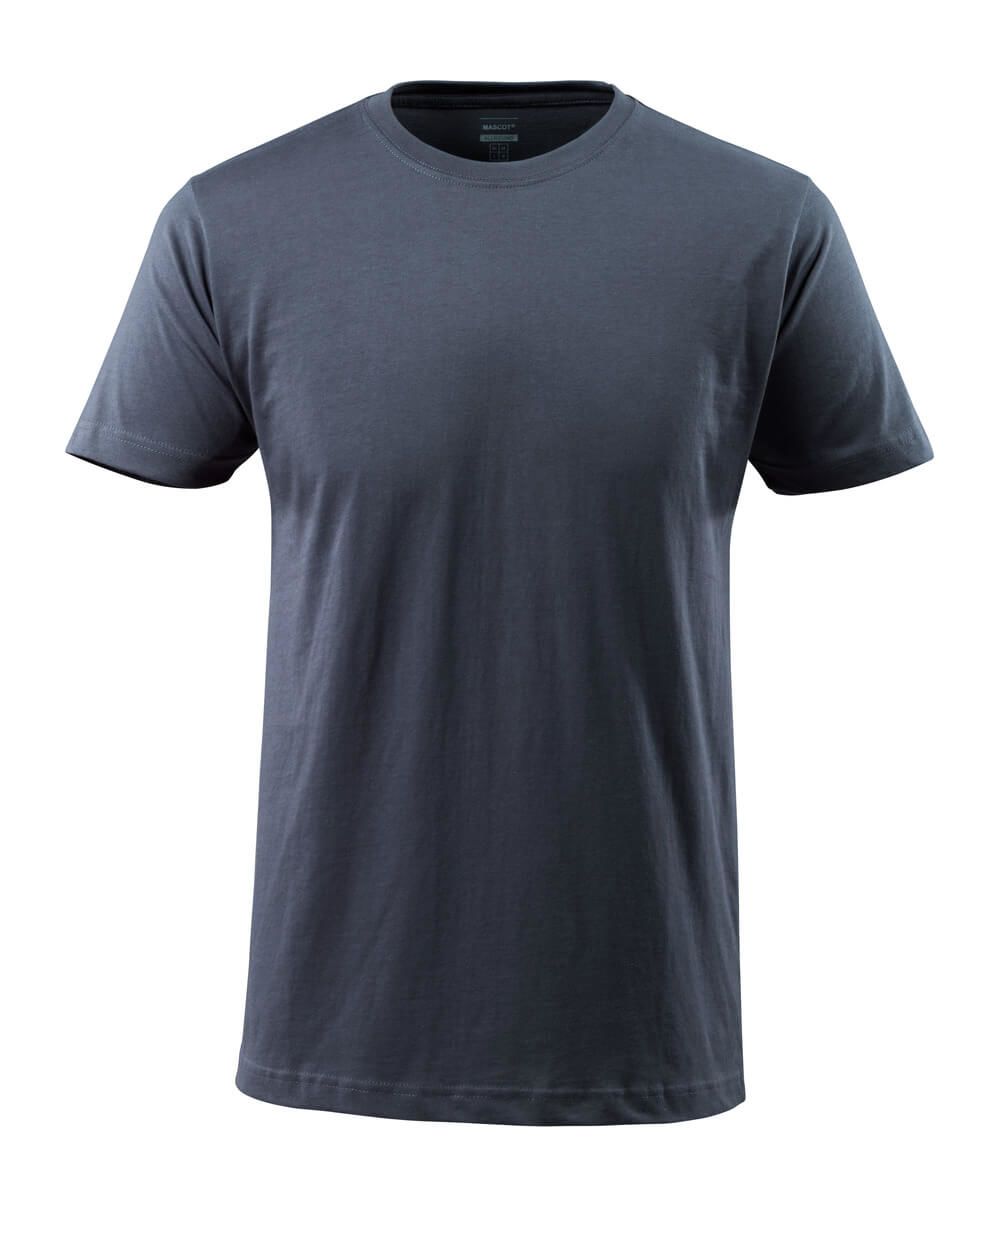 Mascot Workwear Dark Navy Cotton Short Sleeve T-Shirt, UK- L, EUR- L